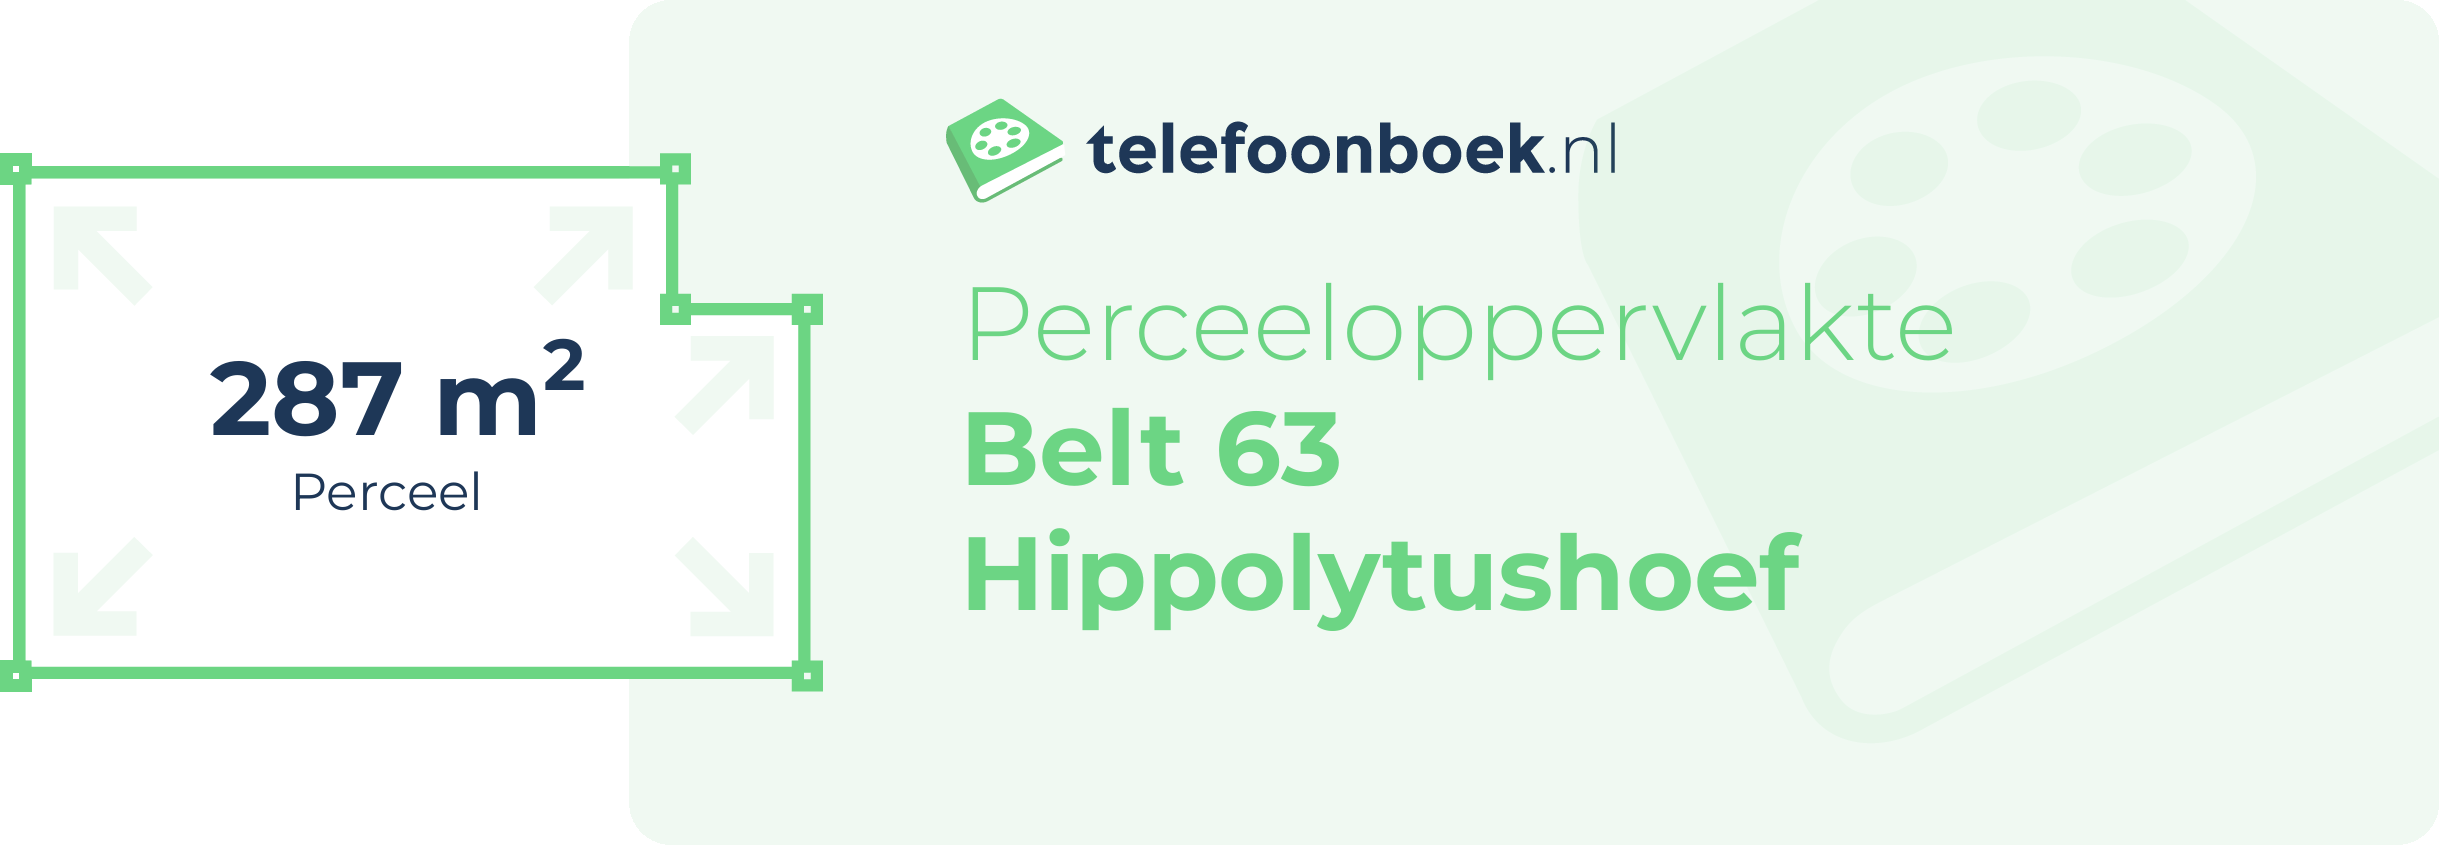 Perceeloppervlakte Belt 63 Hippolytushoef